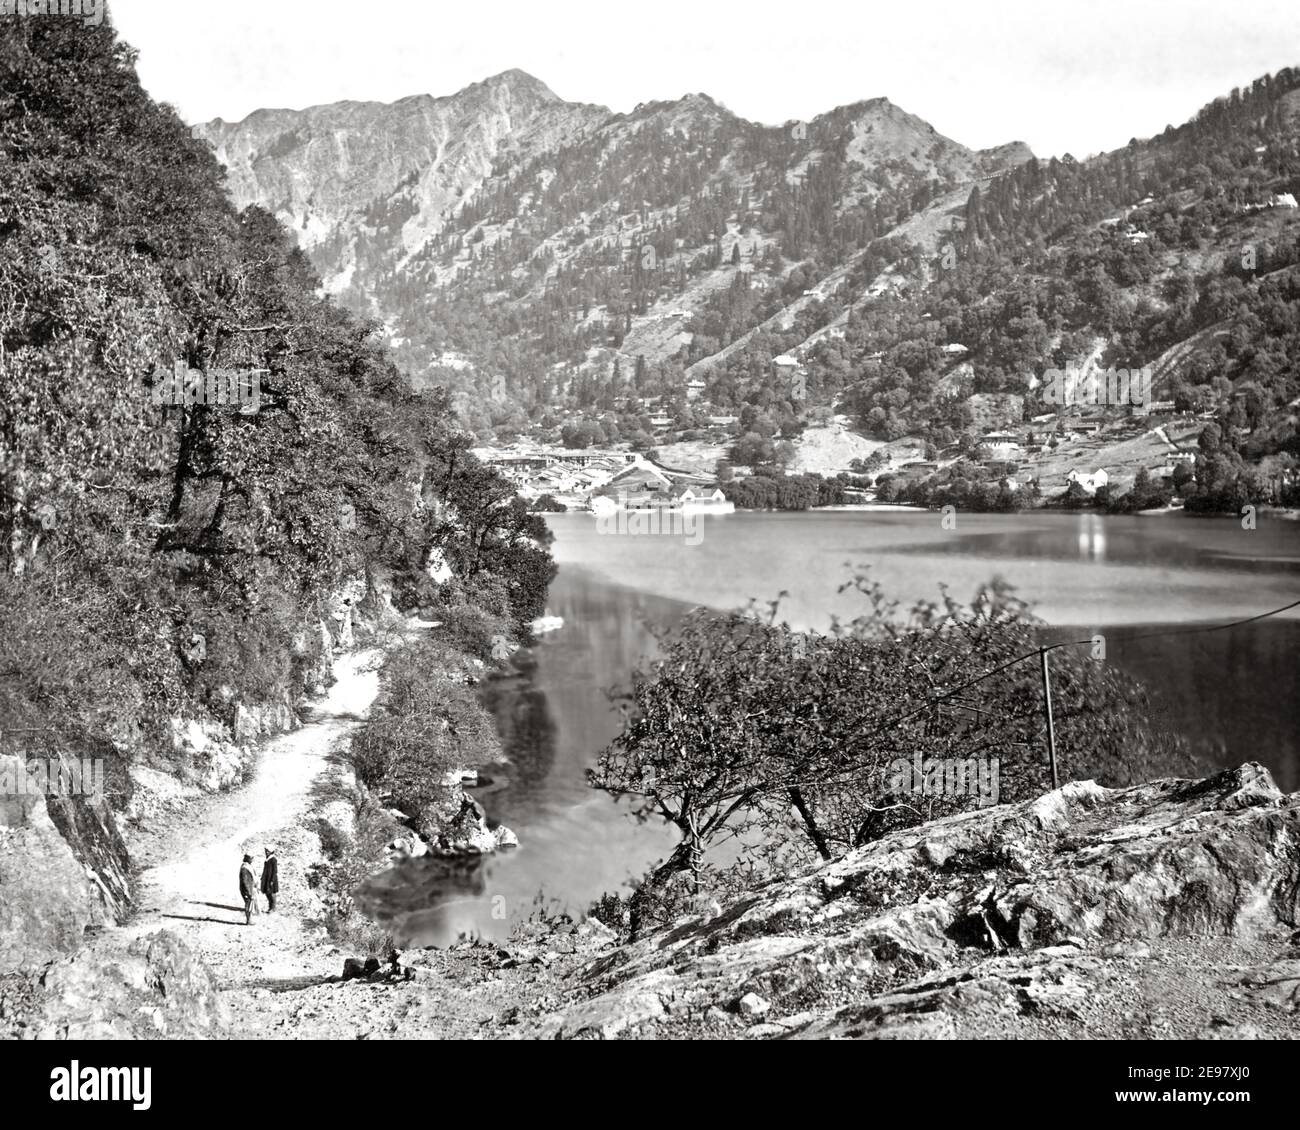 Late 19th century photograph - Nainital Lake, Kumaon region, India Stock Photo